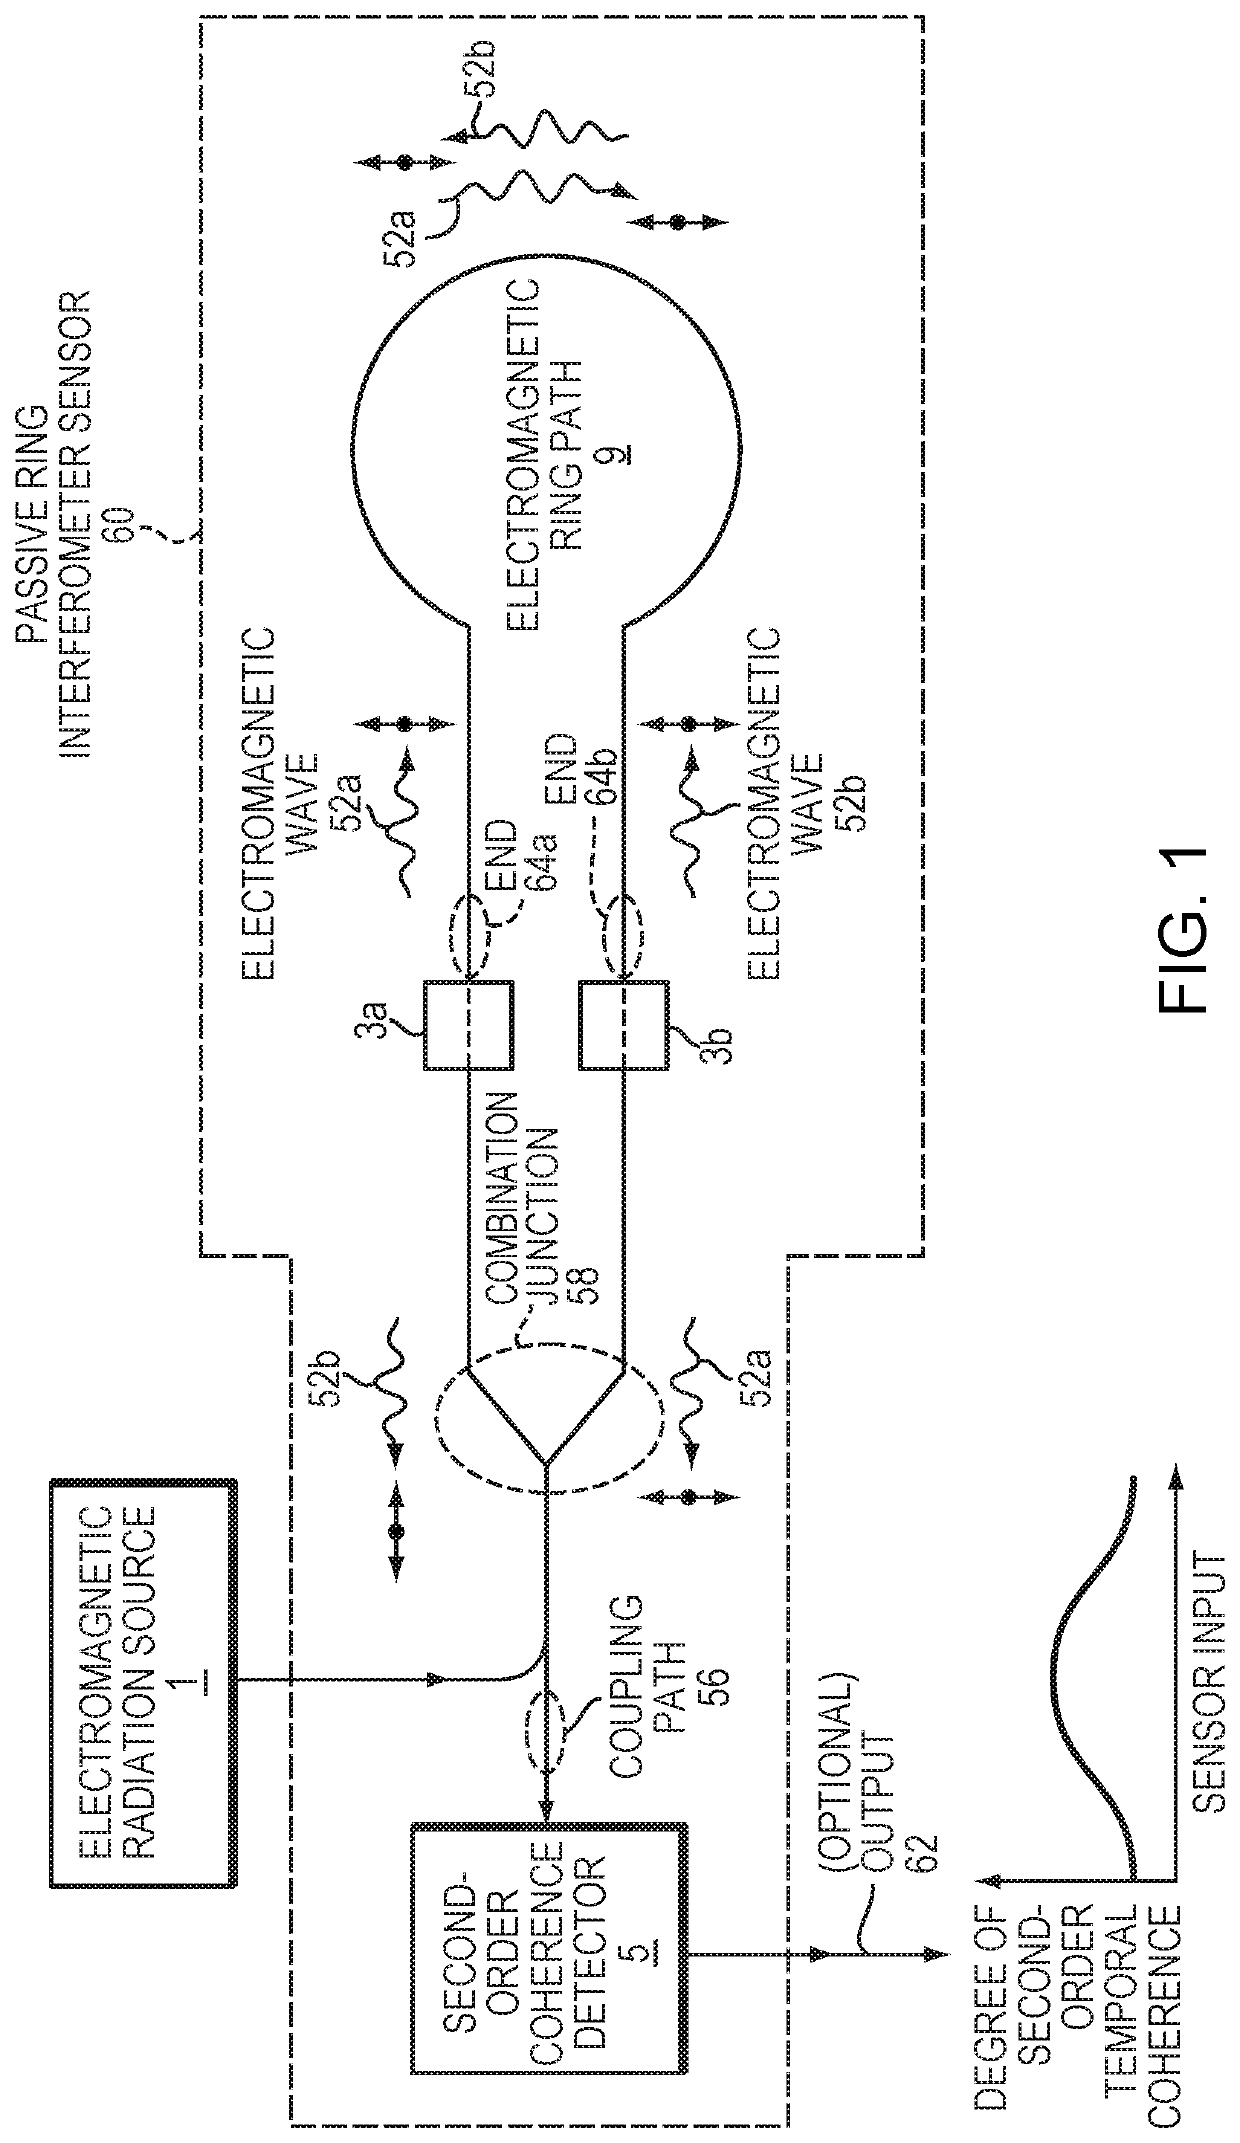 Second-order passive ring interferometer sensor and method